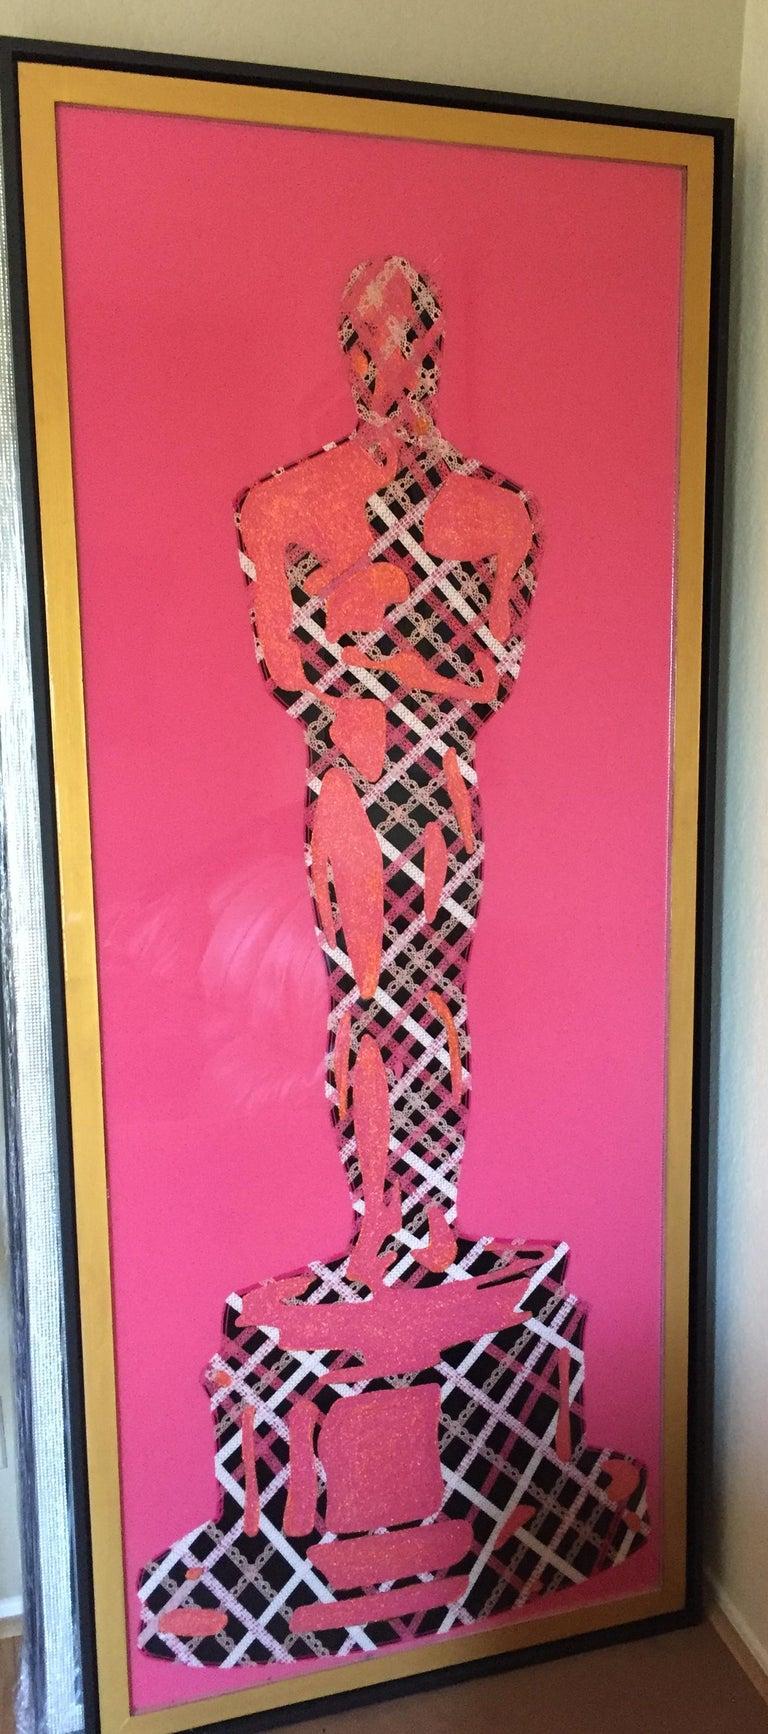 Barbie Oscar I (impression en édition limitée) - Pop Art Print par Mauro Oliveira